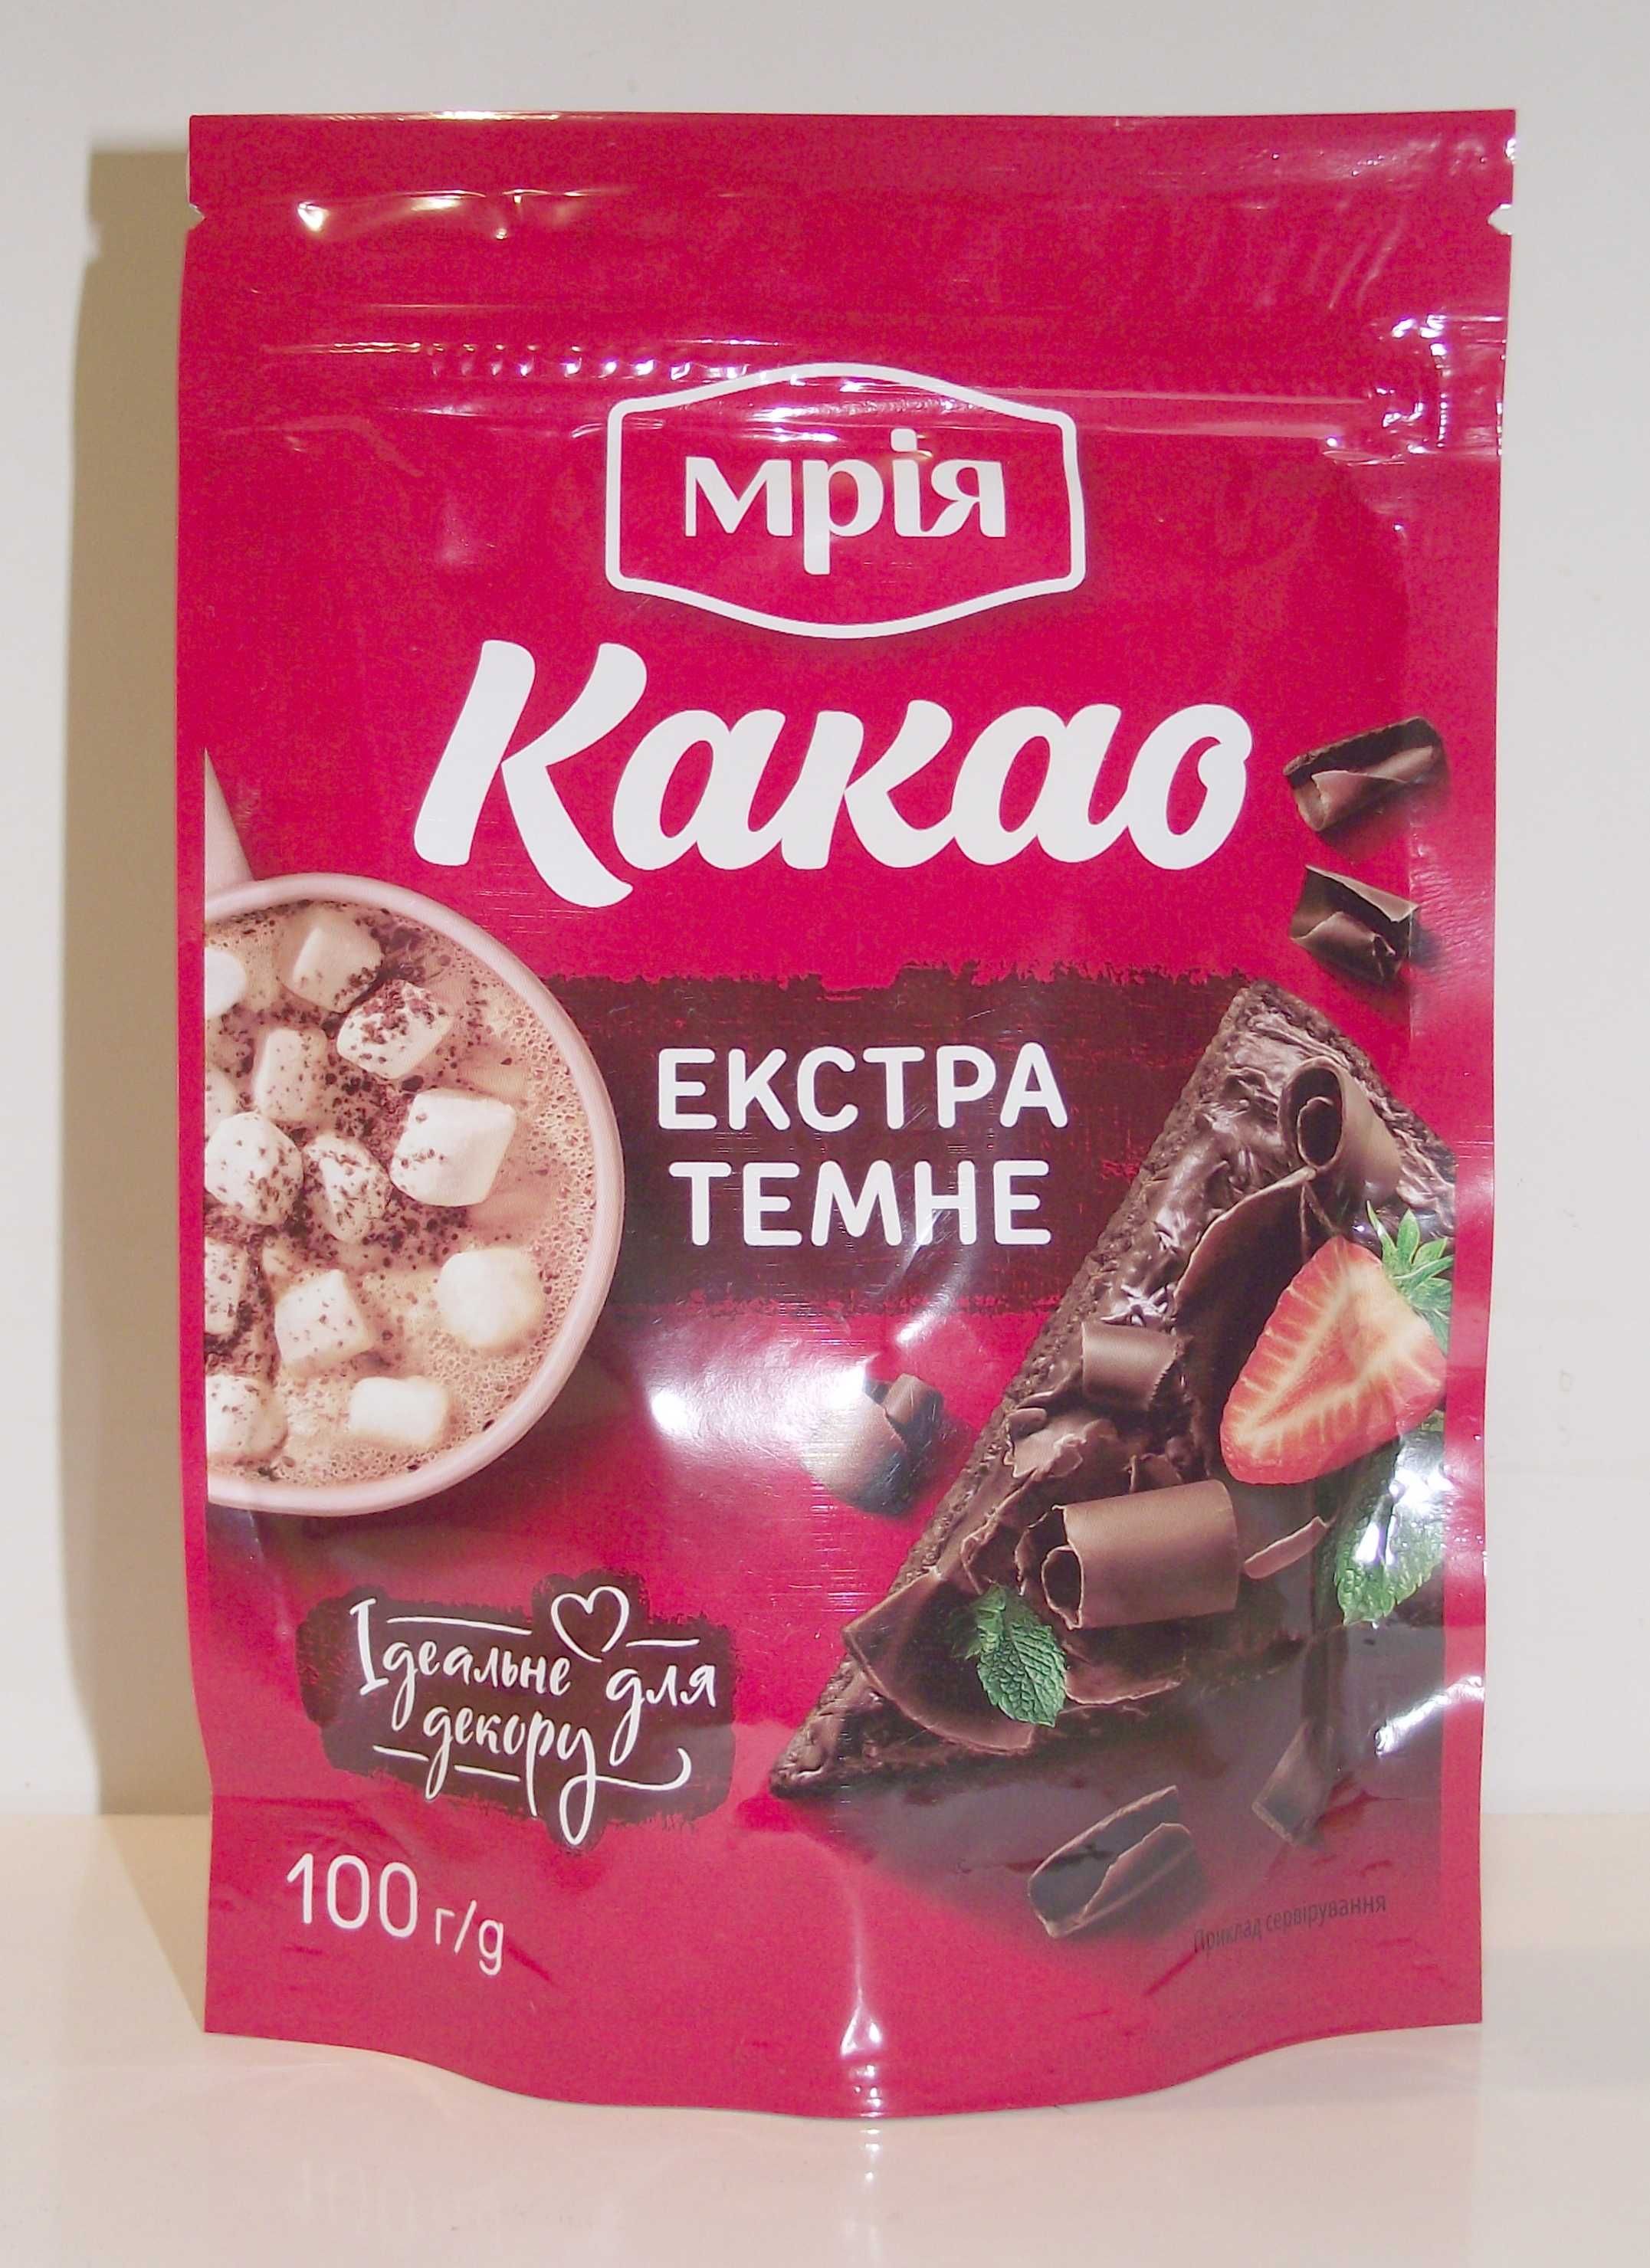 Какао екстра темне 20-22% какао-масла 100 г/45 грн